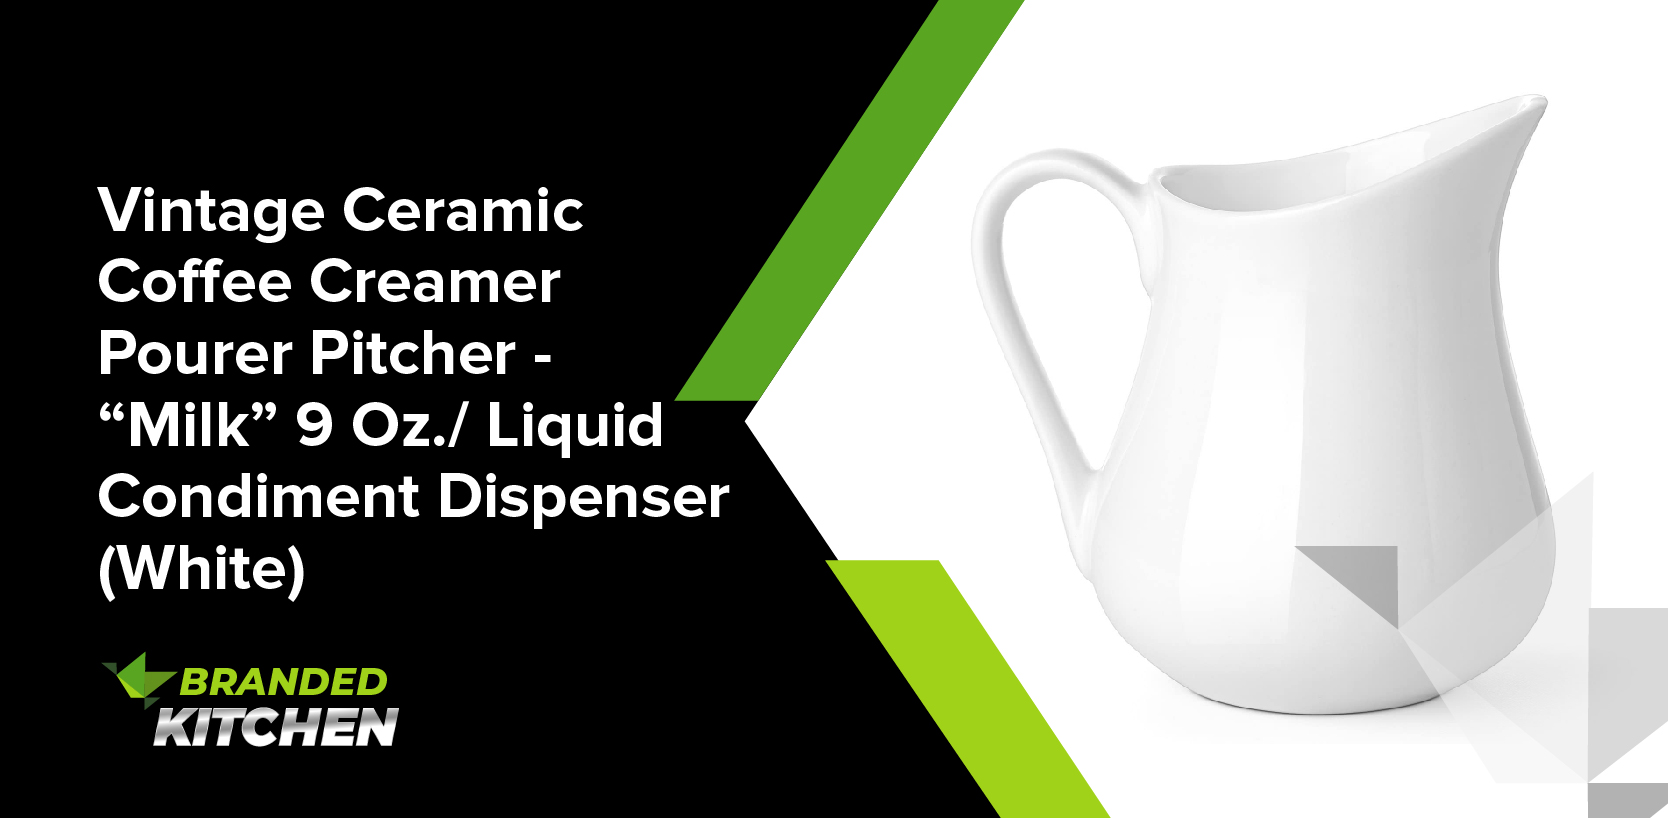 Vintage Ceramic Coffee Creamer Pourer Pitcher - “Milk” 9 Oz./ Liquid Condiment Dispenser (White)